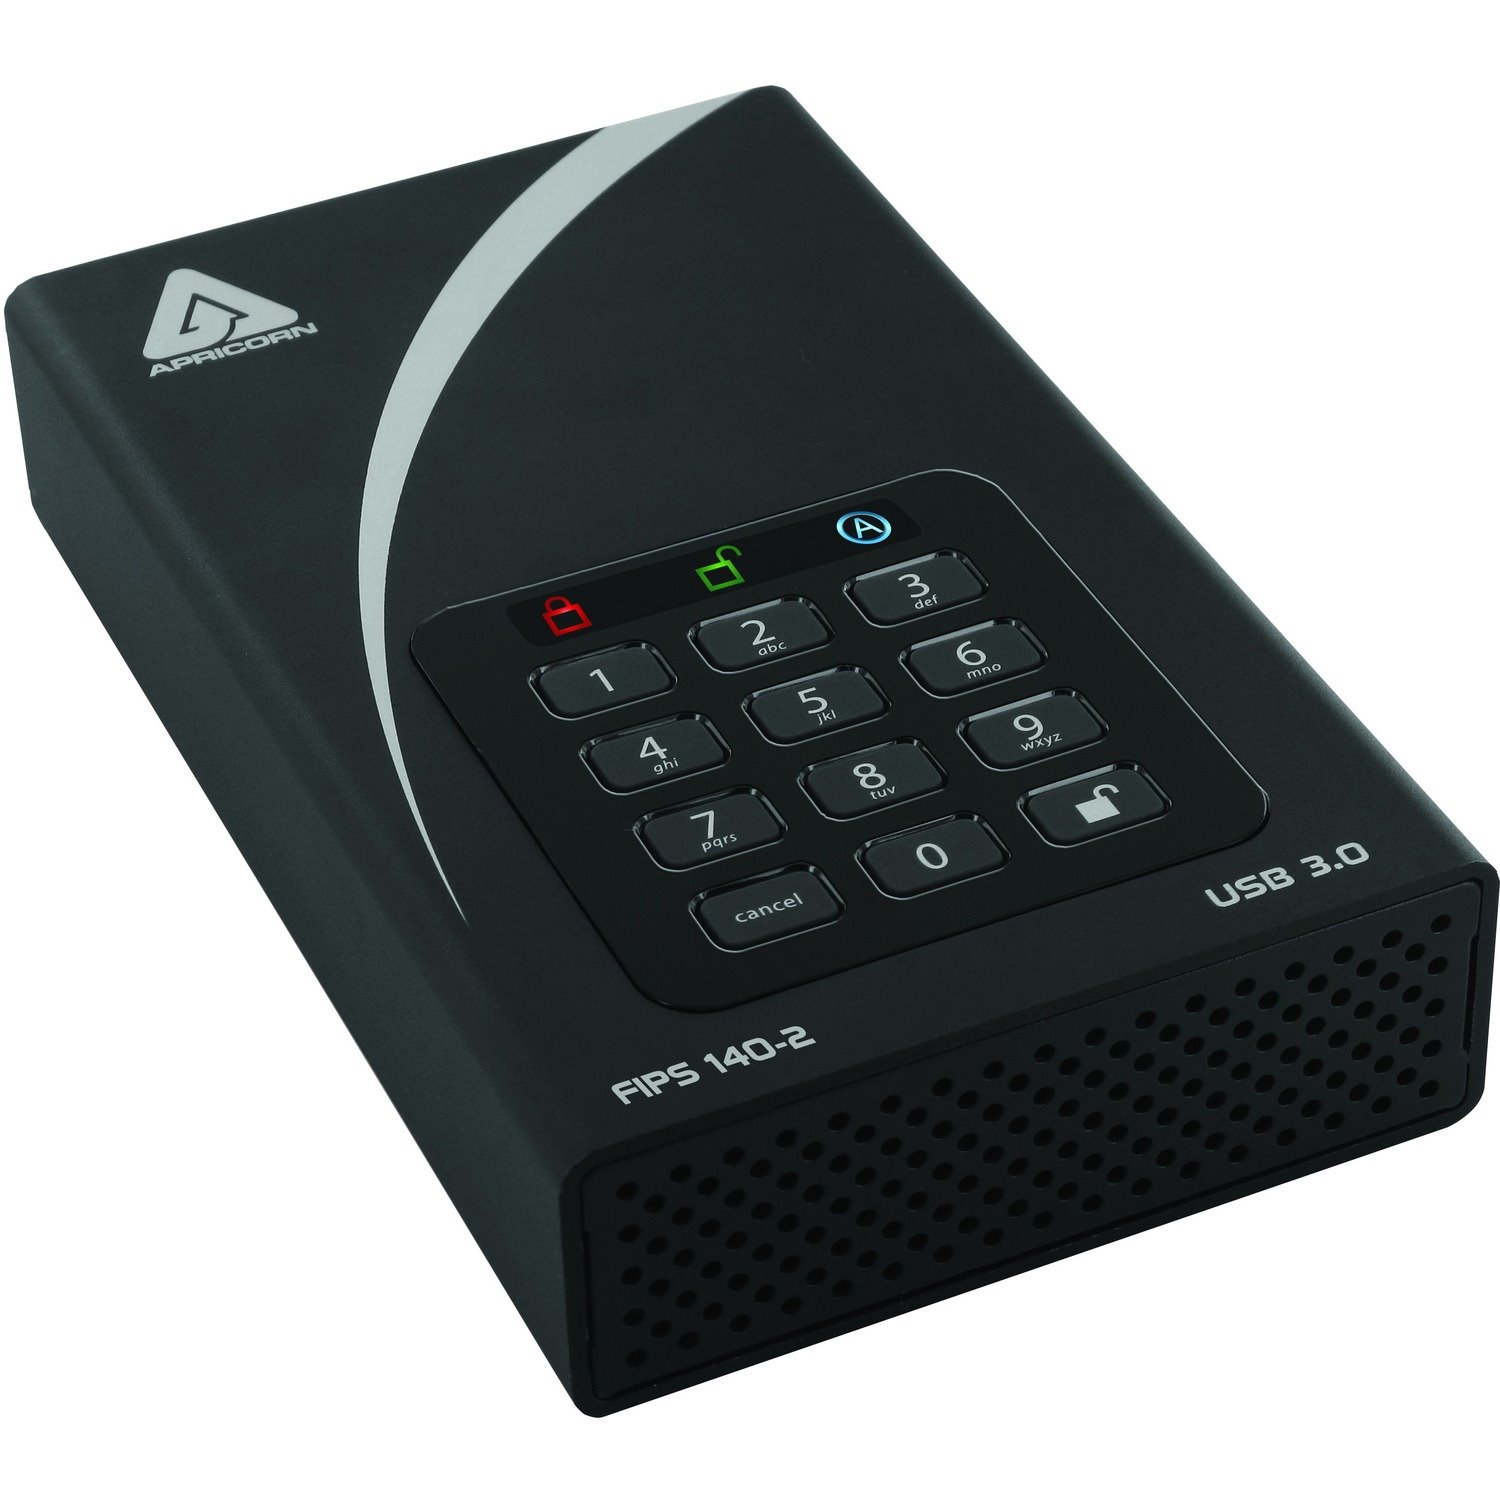 Apricorn Aegis Padlock DT FIPS ADT-3PL256F-12TB 12 TB Desktop Hard Drive - External - Black - TAA Compliant